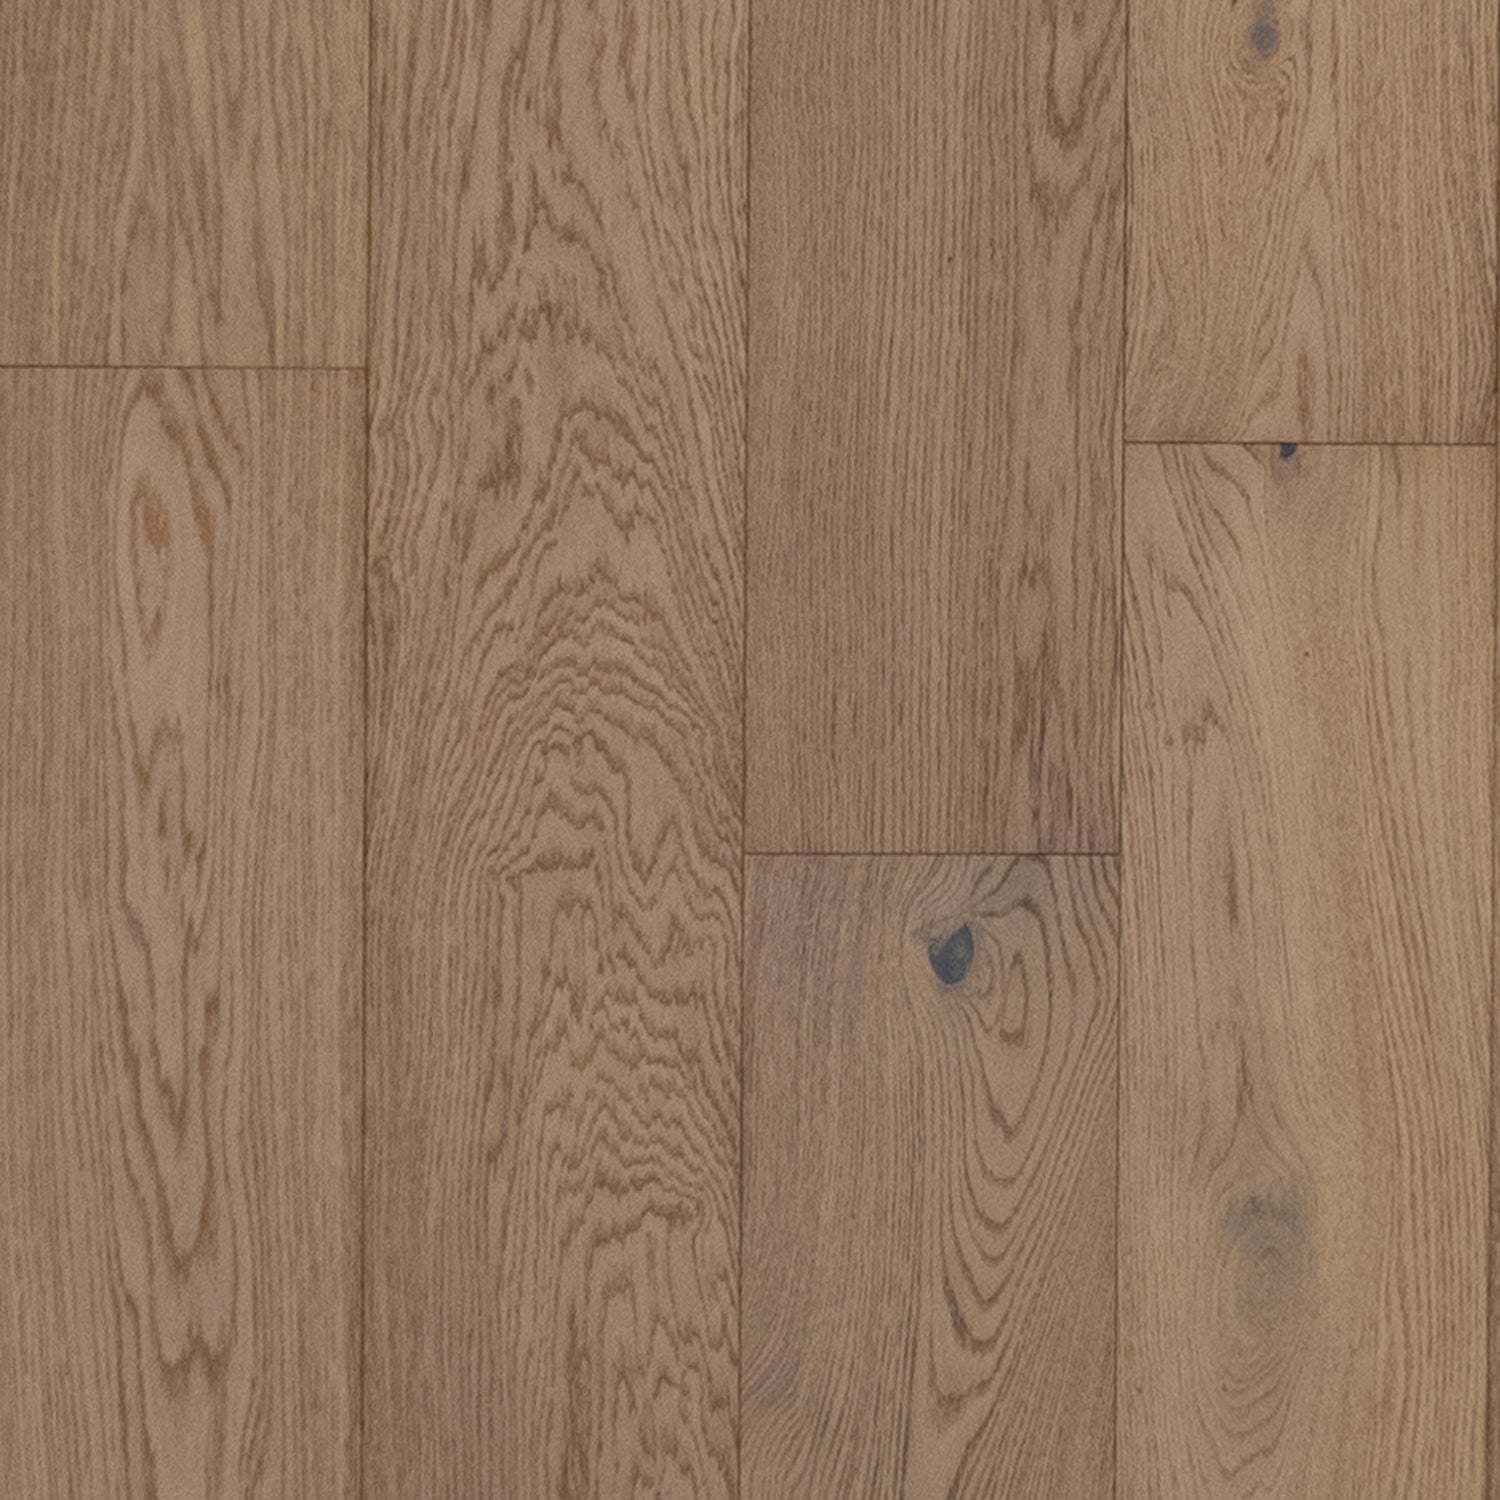 Sandlin Timber Flooring Wideboard T&G